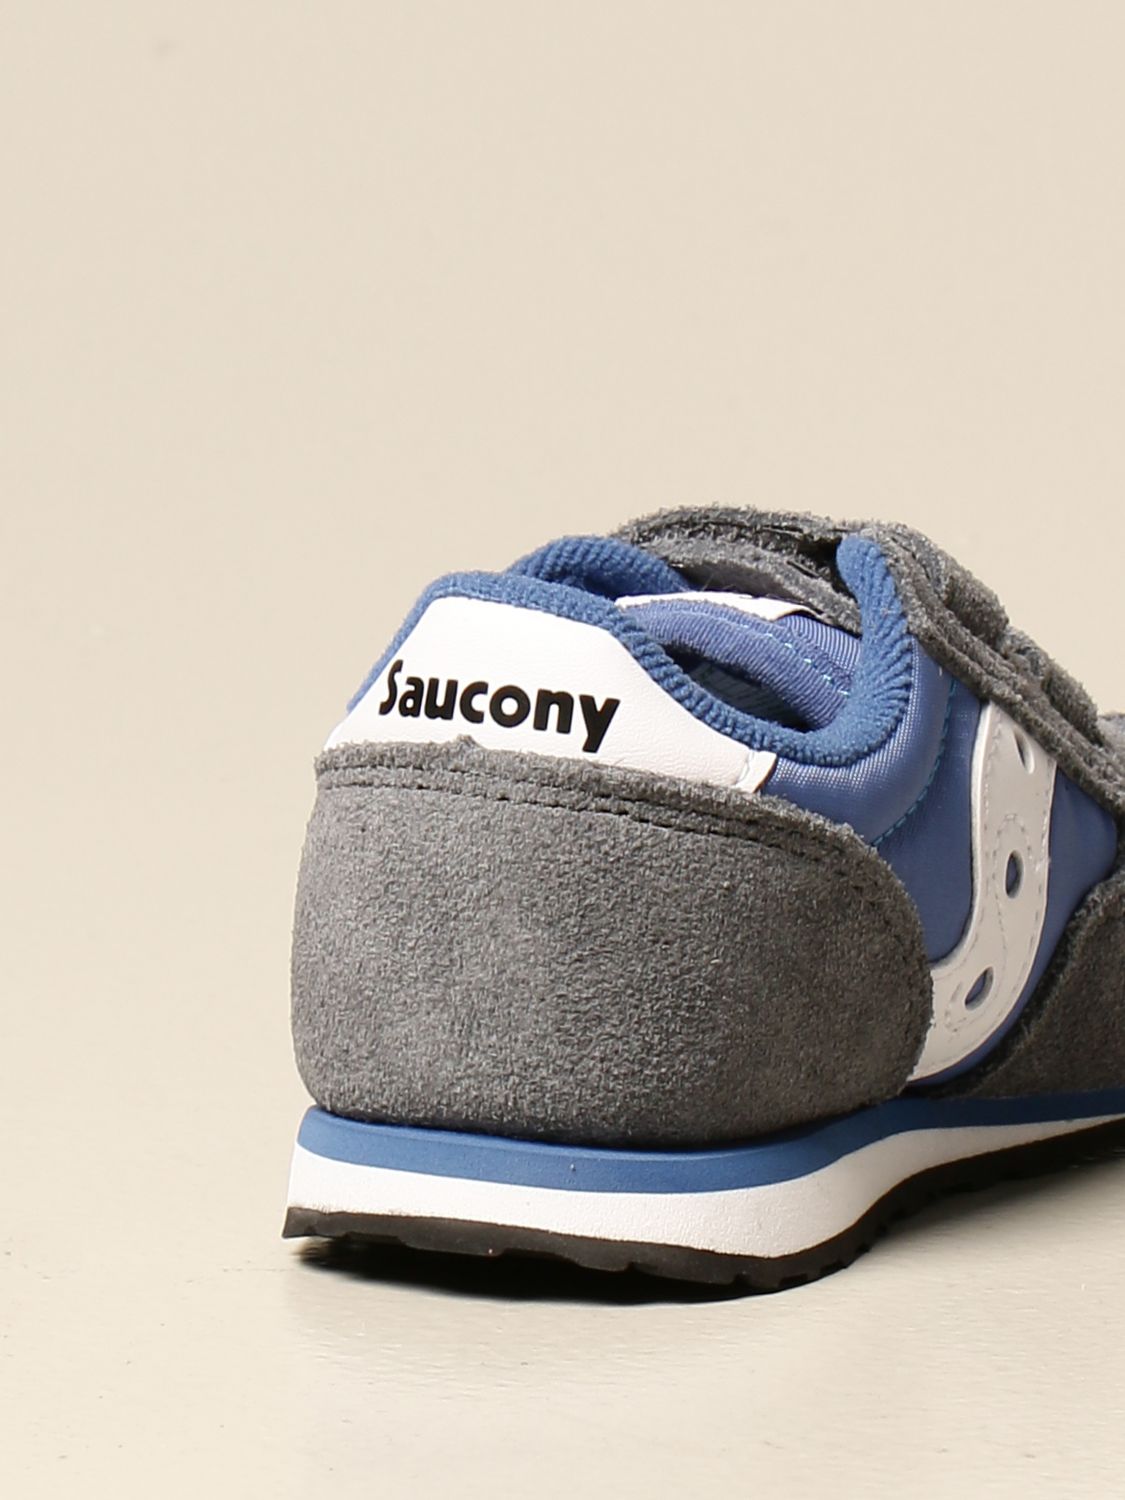 saucony grey shoes